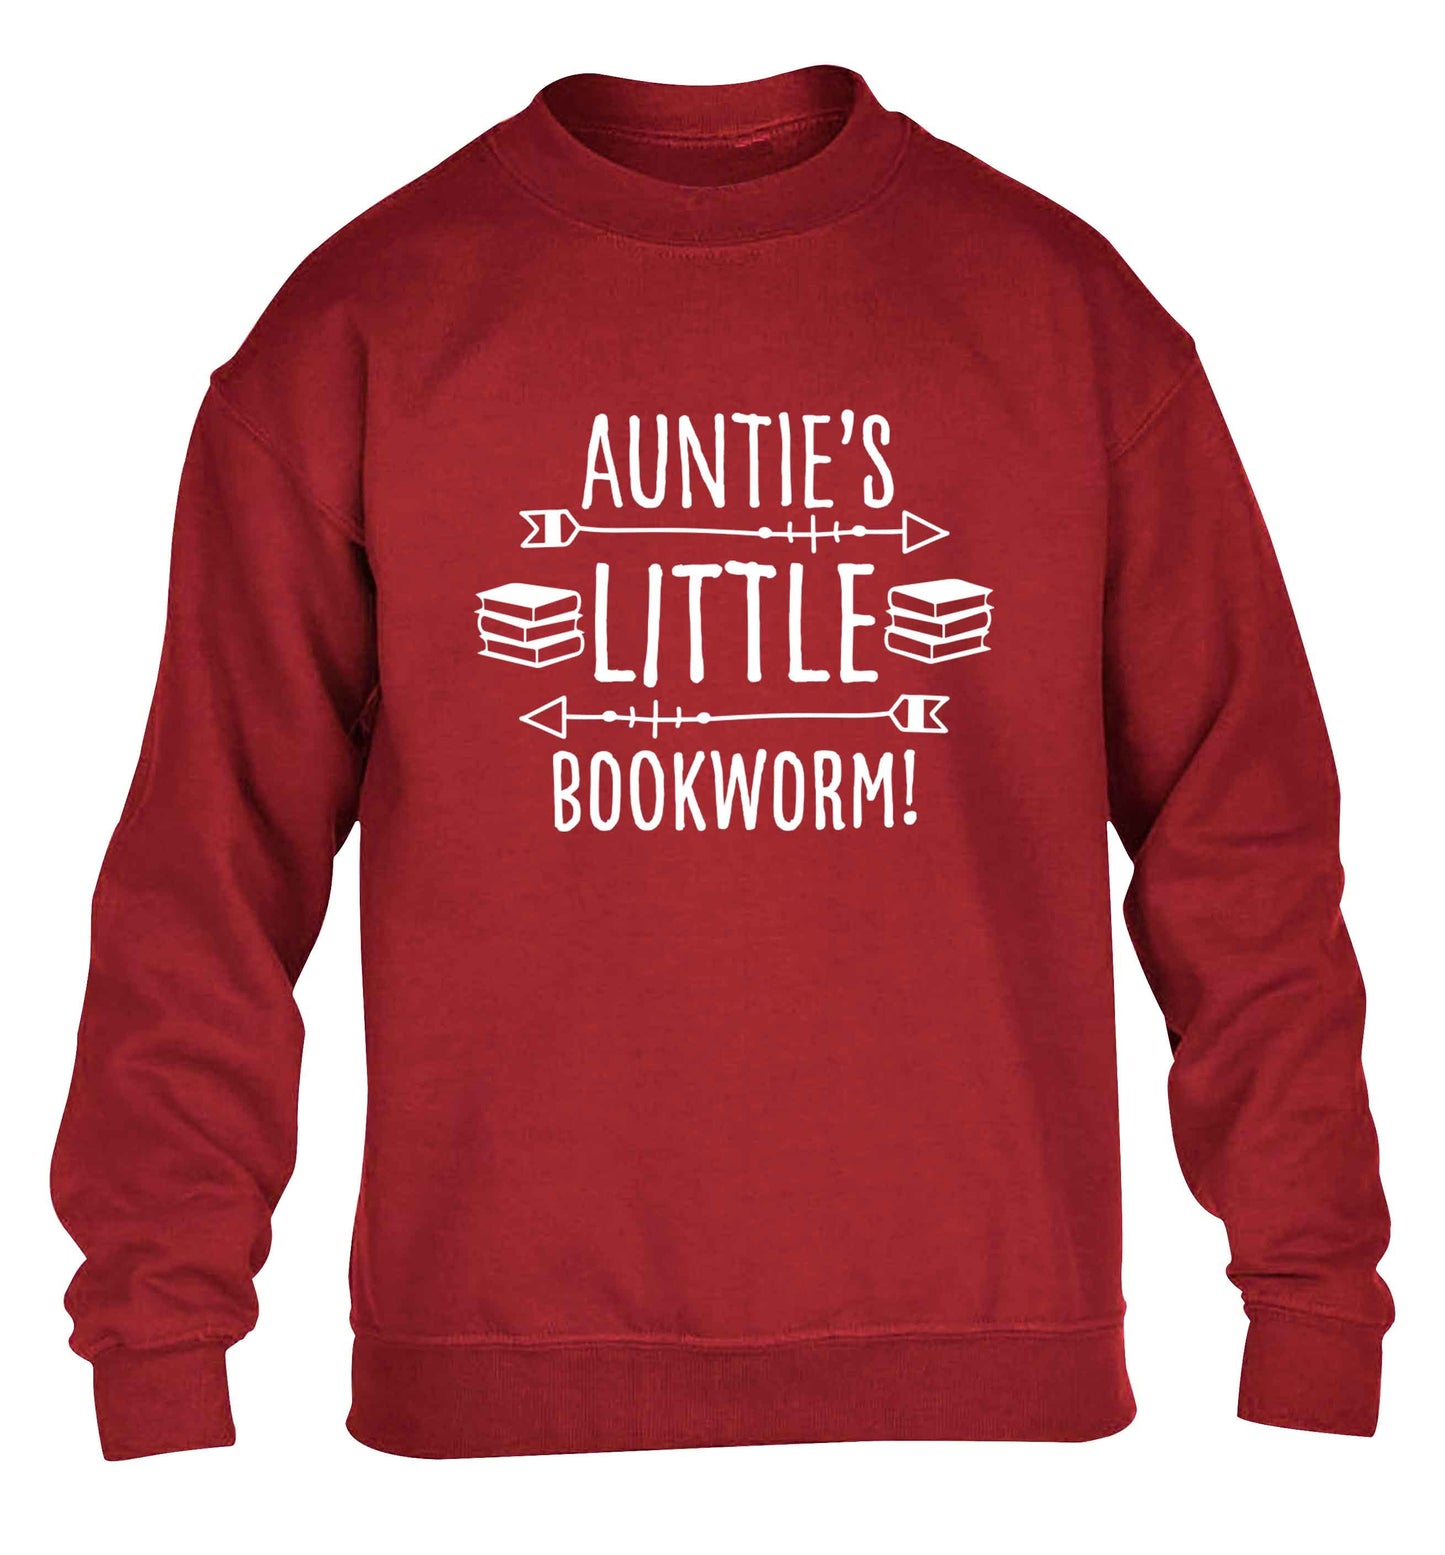 Auntie's little bookworm children's grey sweater 12-13 Years